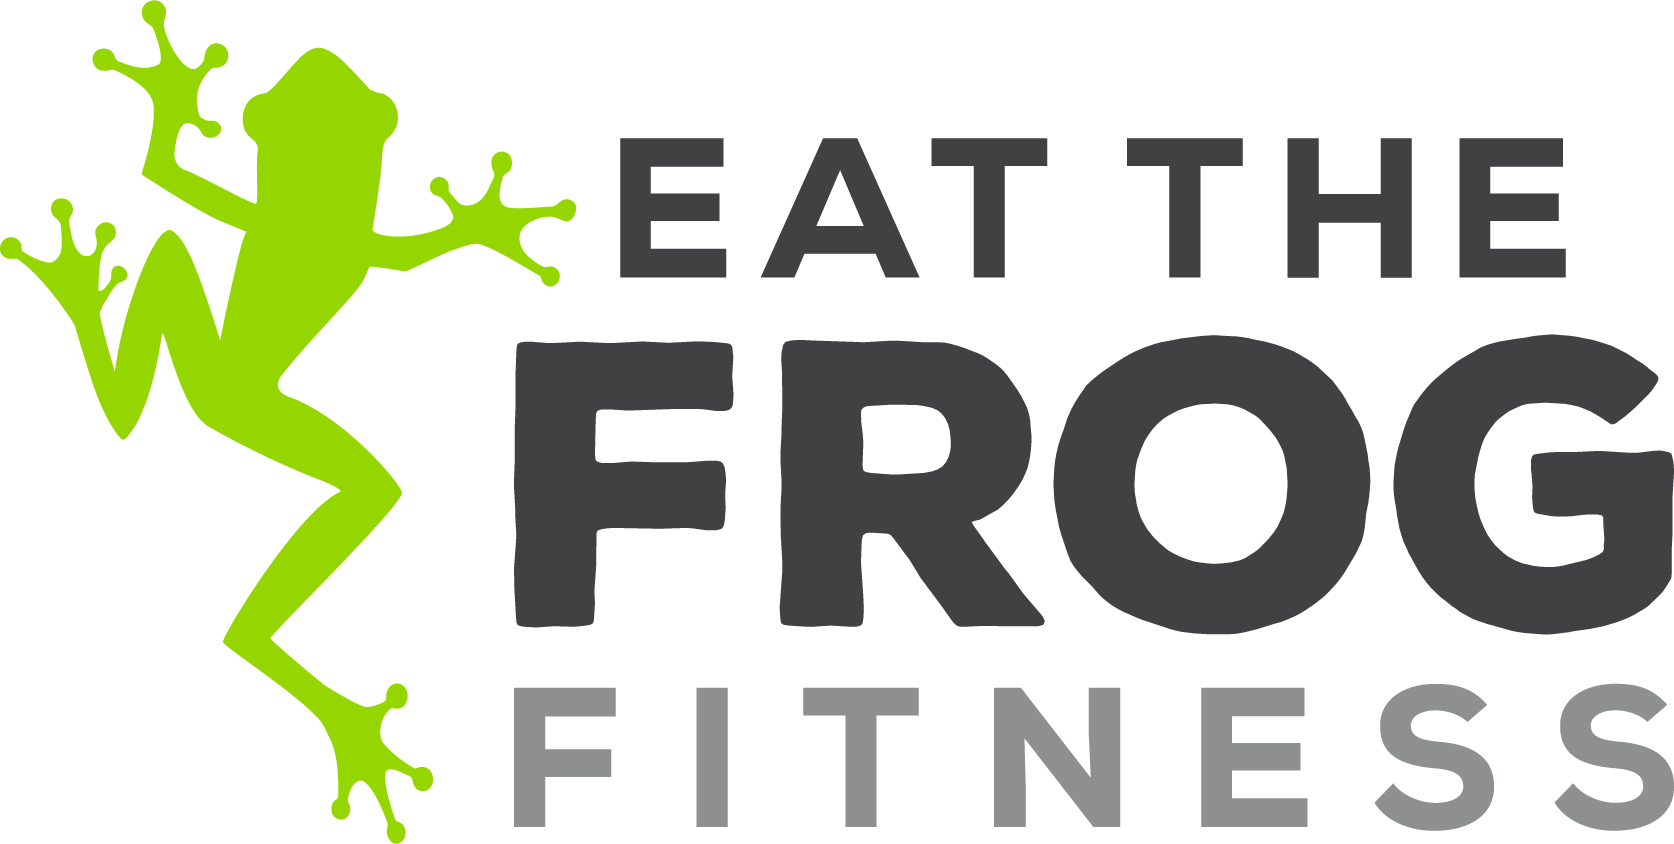 Eat The Frog Fitness- Geneva, IL